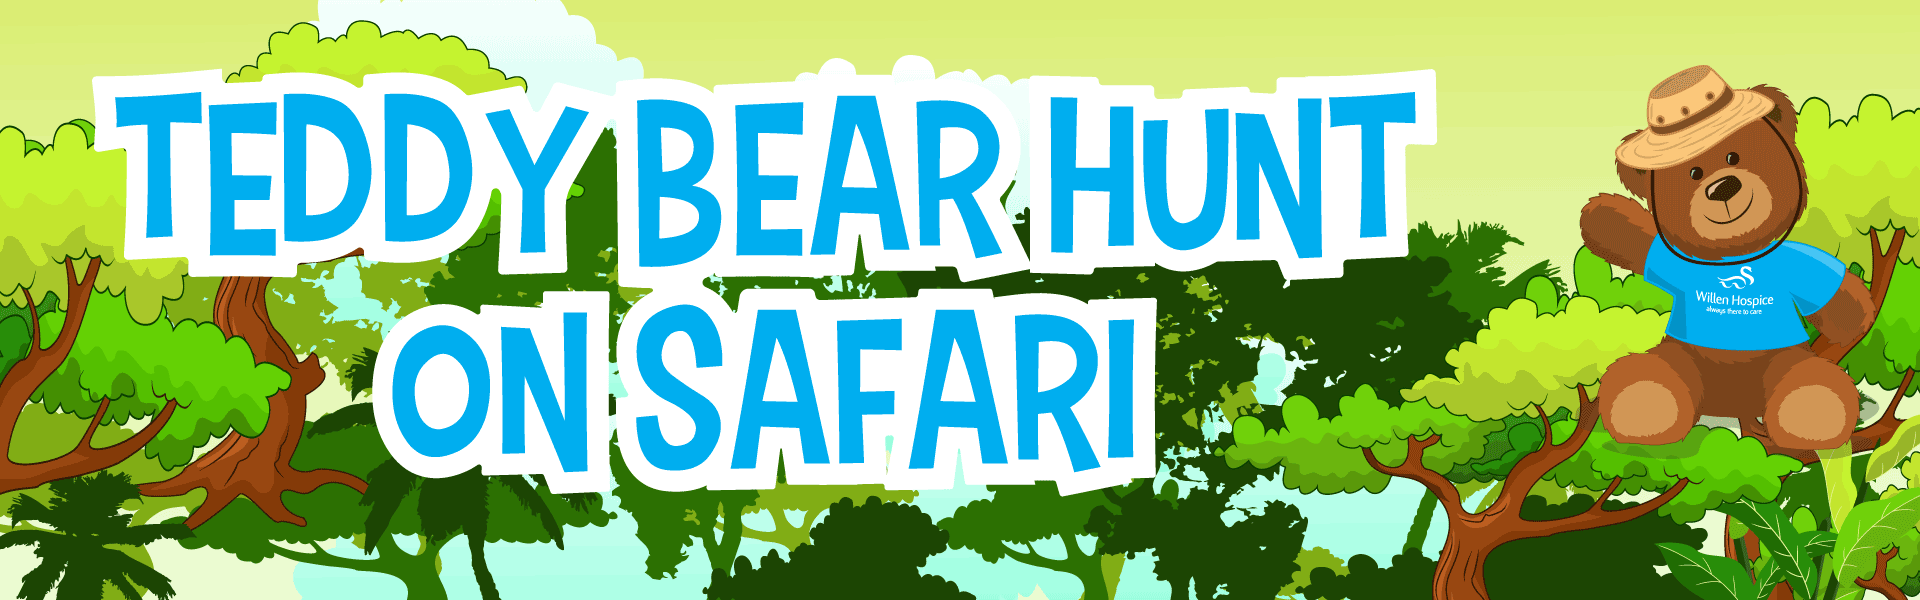 Teddy Bear Hunt on Safari Top Image